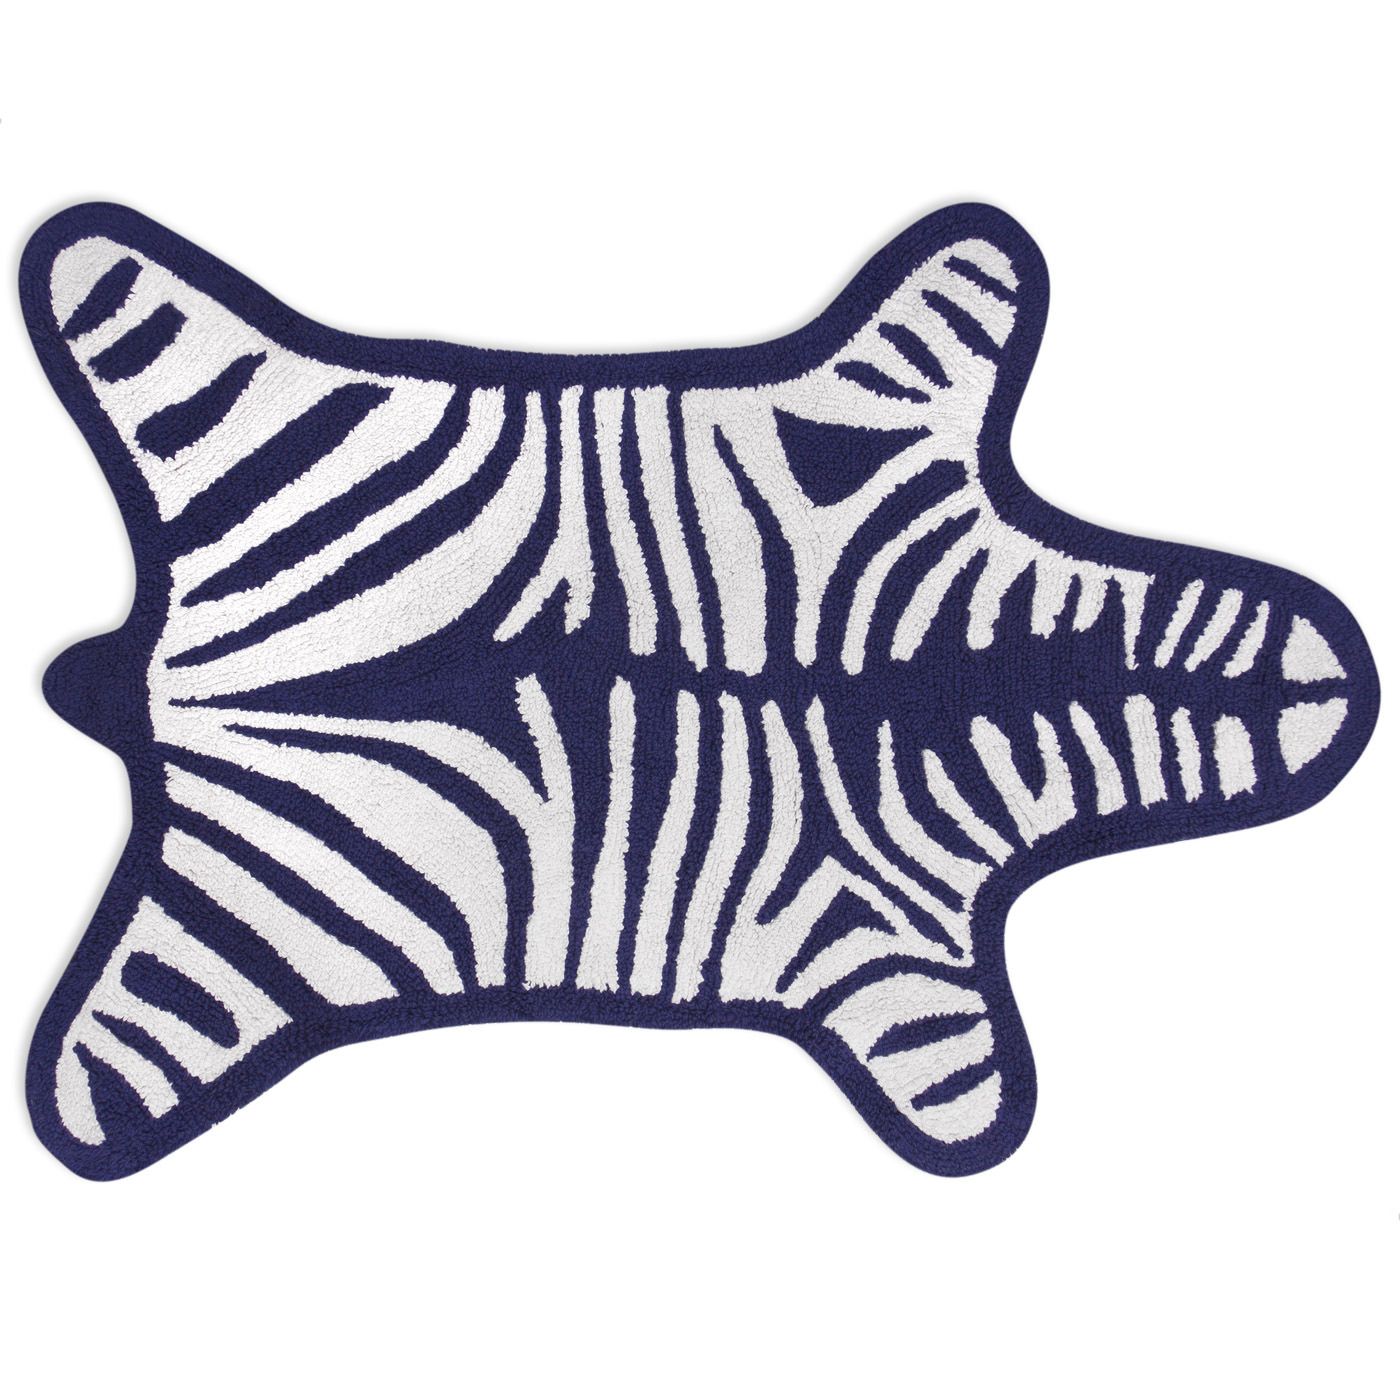 JONATHAN ADLER - Badteppich "Zebra" 